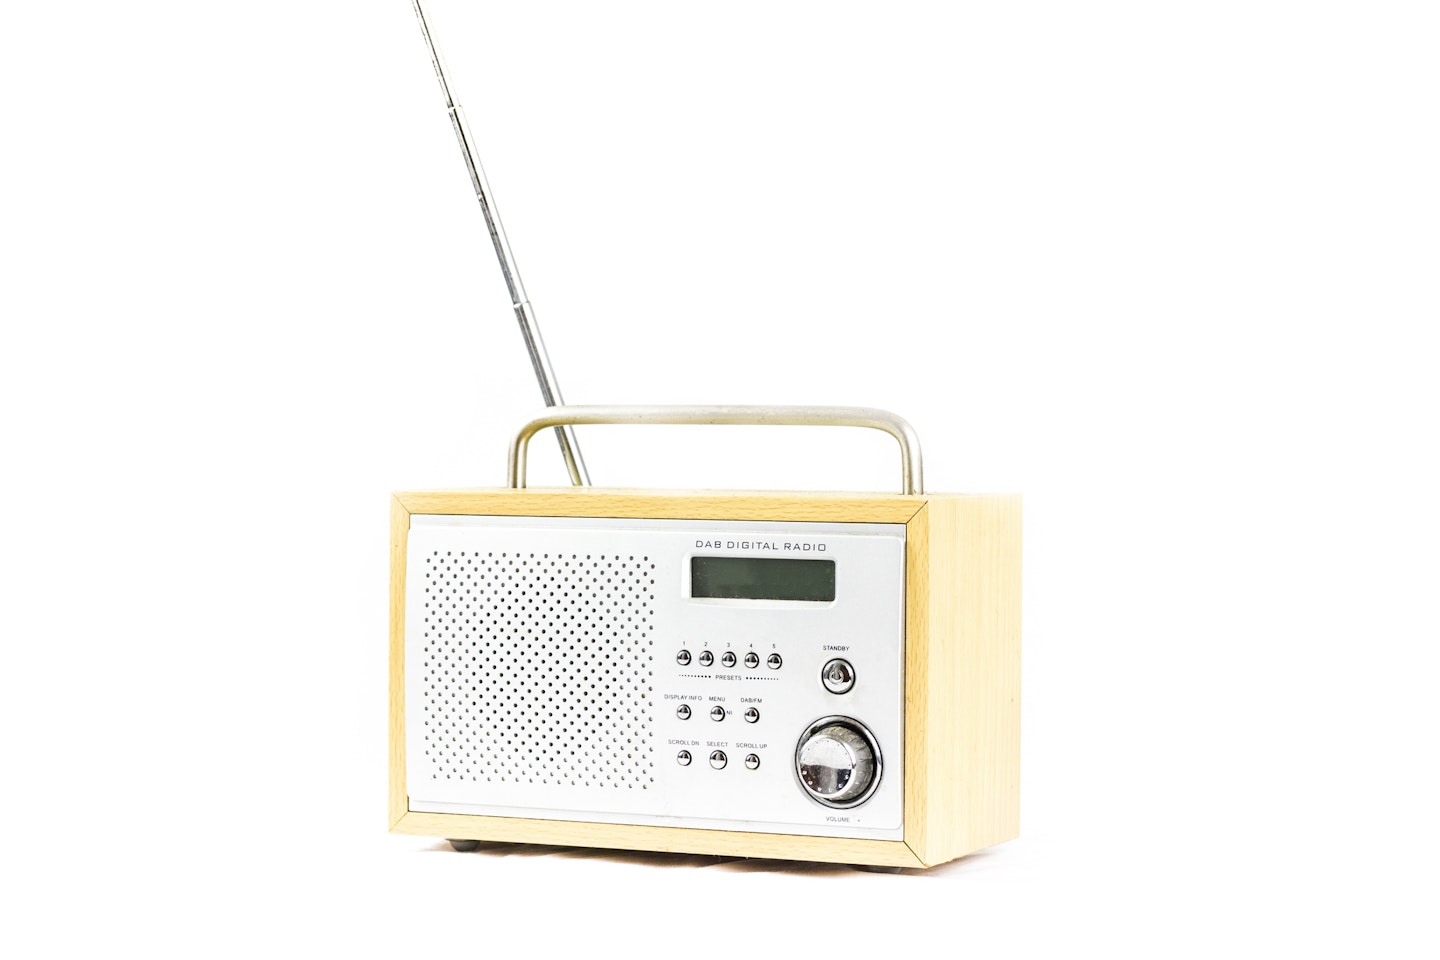 The best portable DAB radios